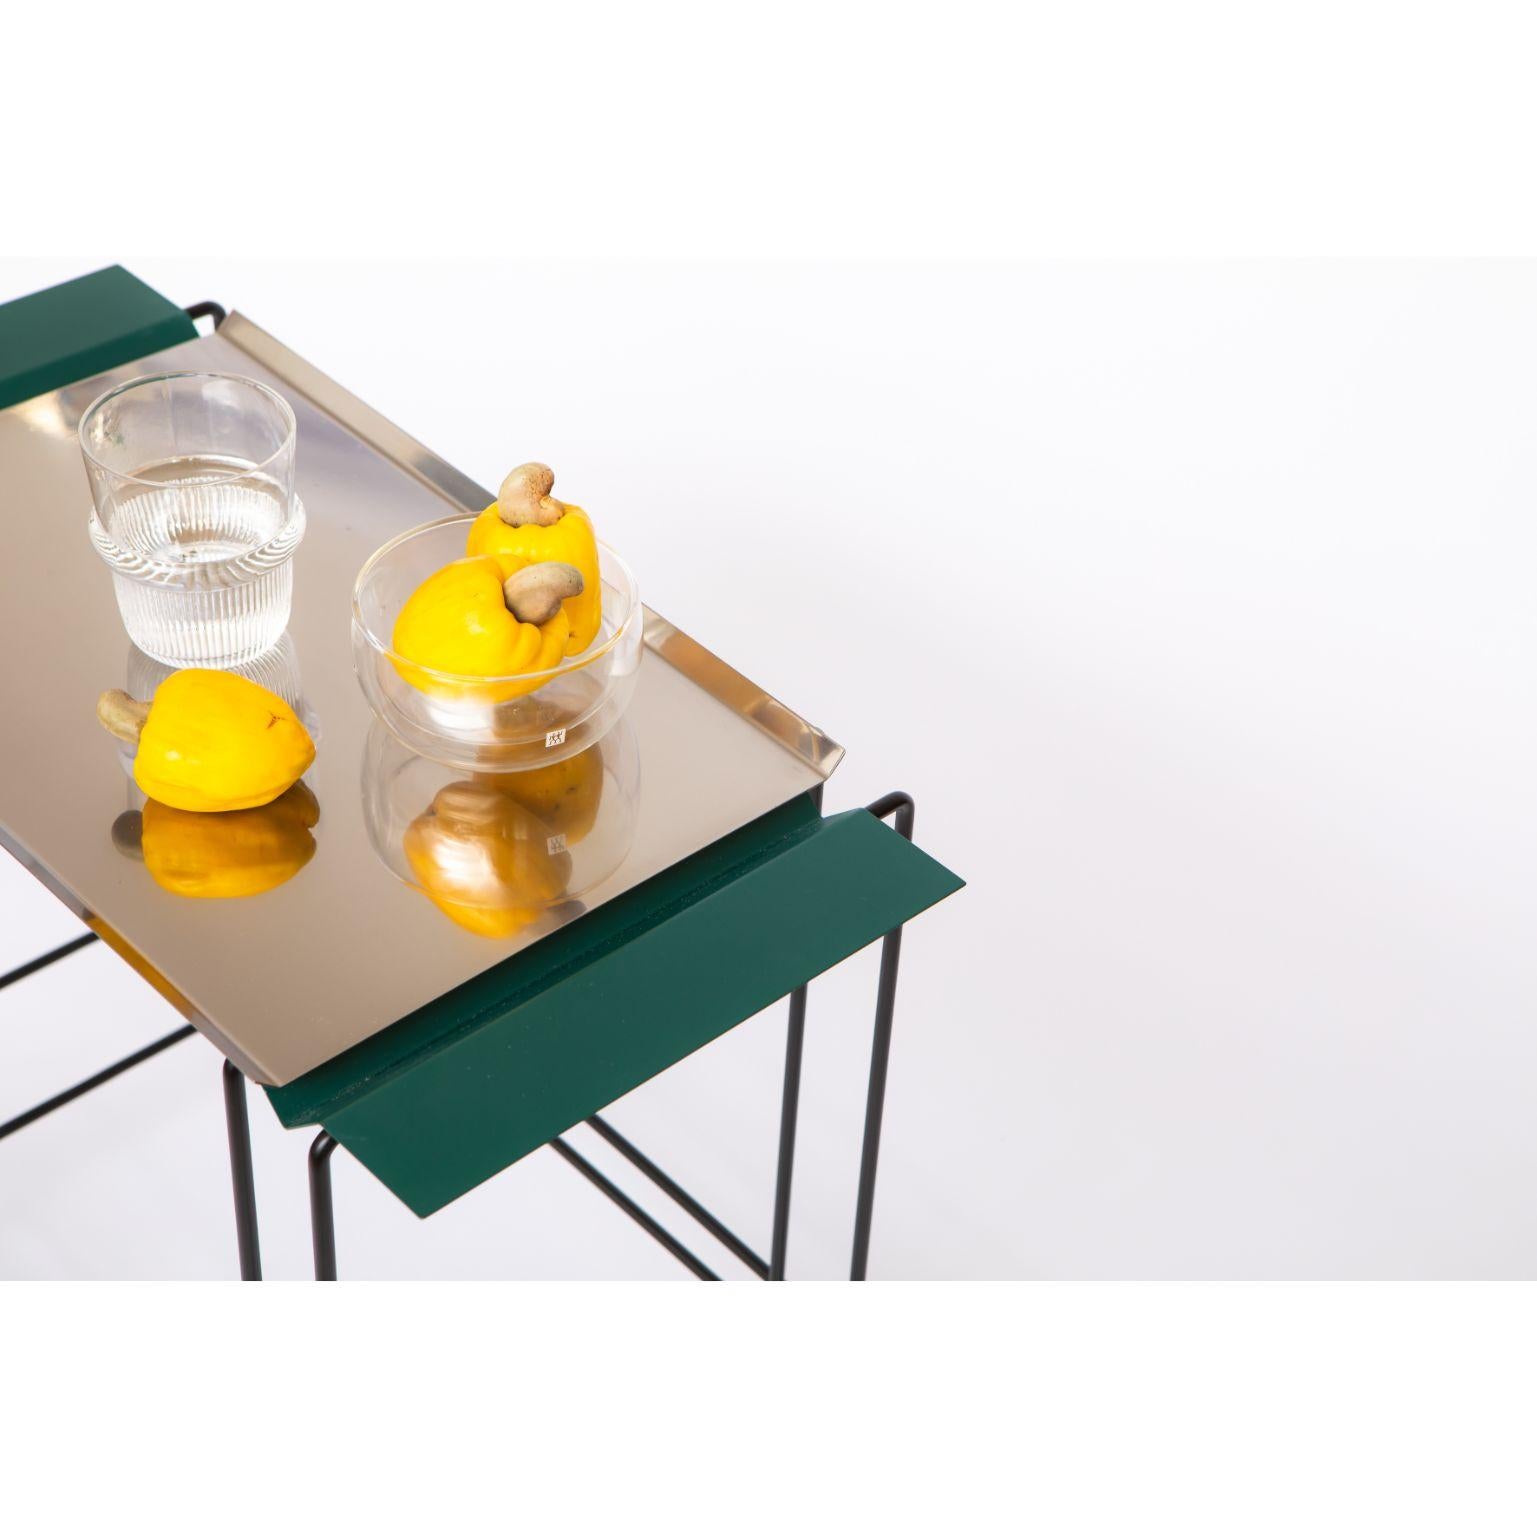 Metal Leva 50 - Table by Alva Design